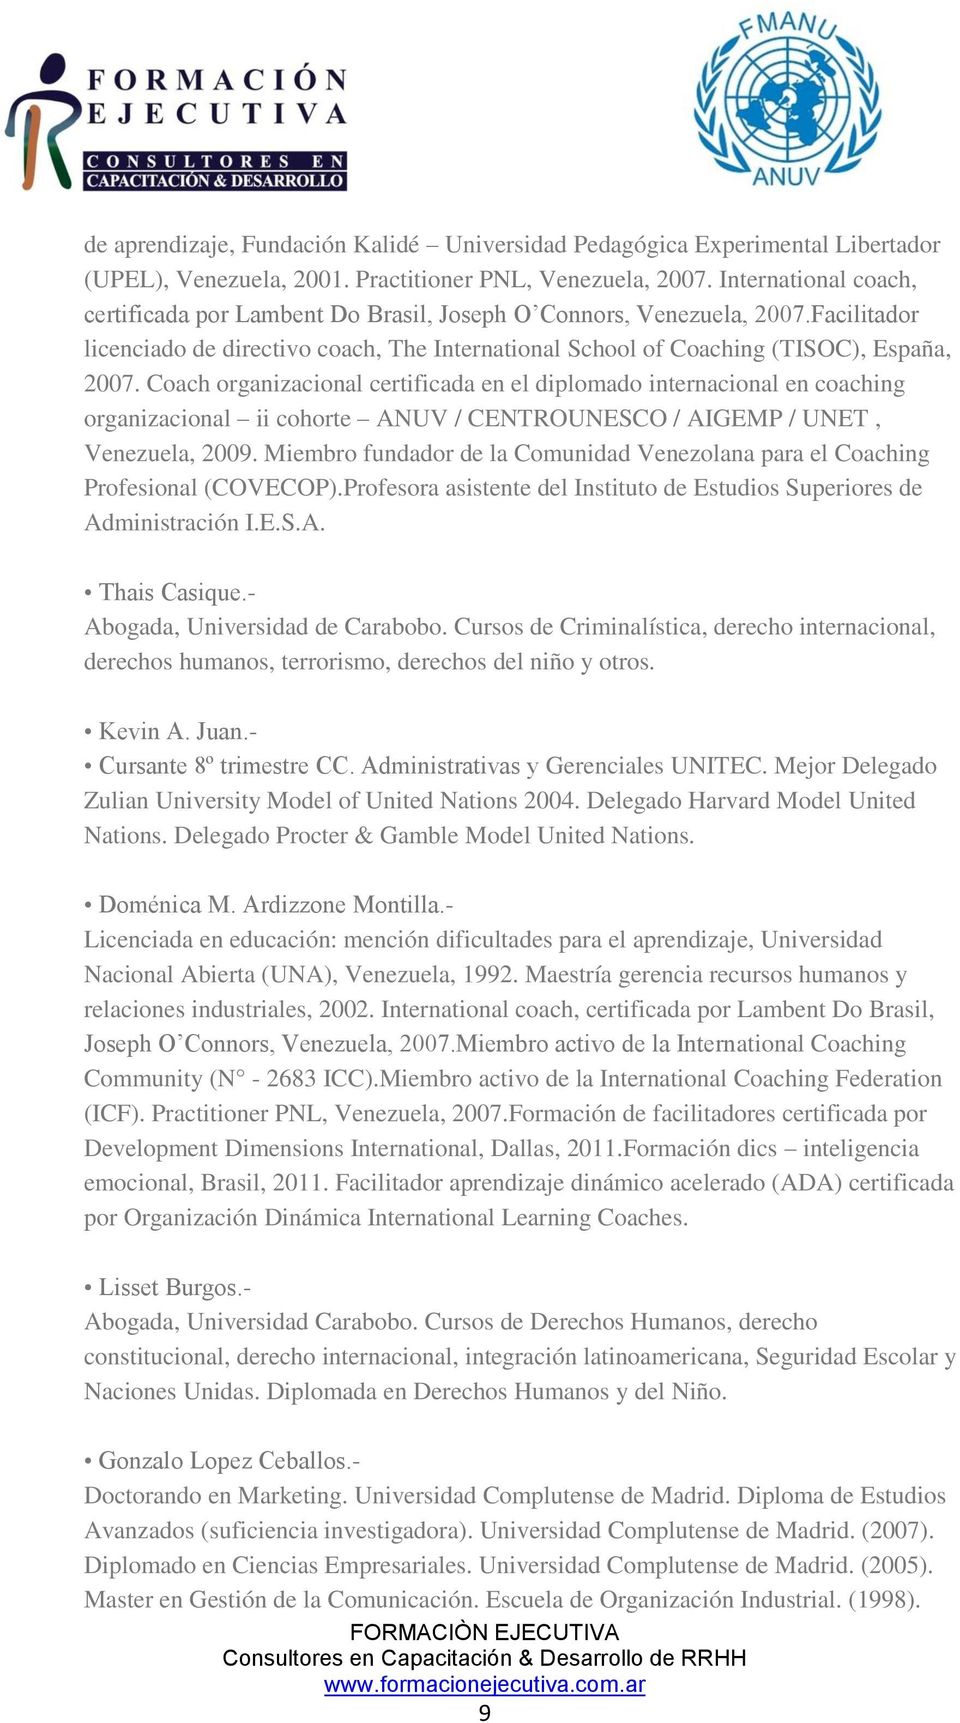 Coach organizacional certificada en el diplomado internacional en coaching organizacional ii cohorte ANUV / CENTROUNESCO / AIGEMP / UNET, Venezuela, 2009.